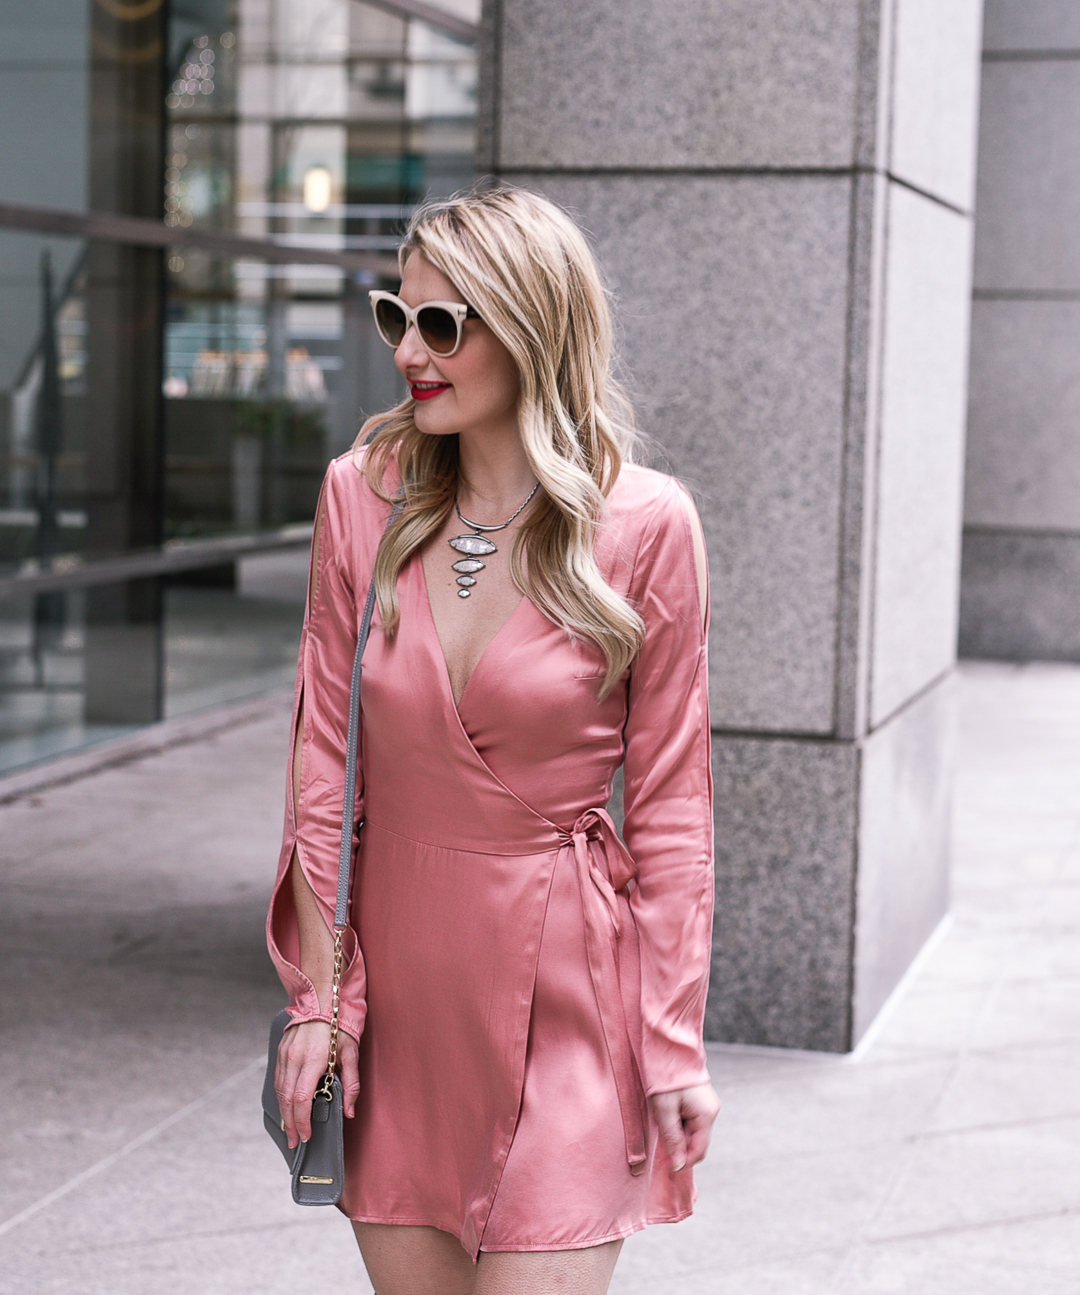 Blush pink silk wrap dress for spring